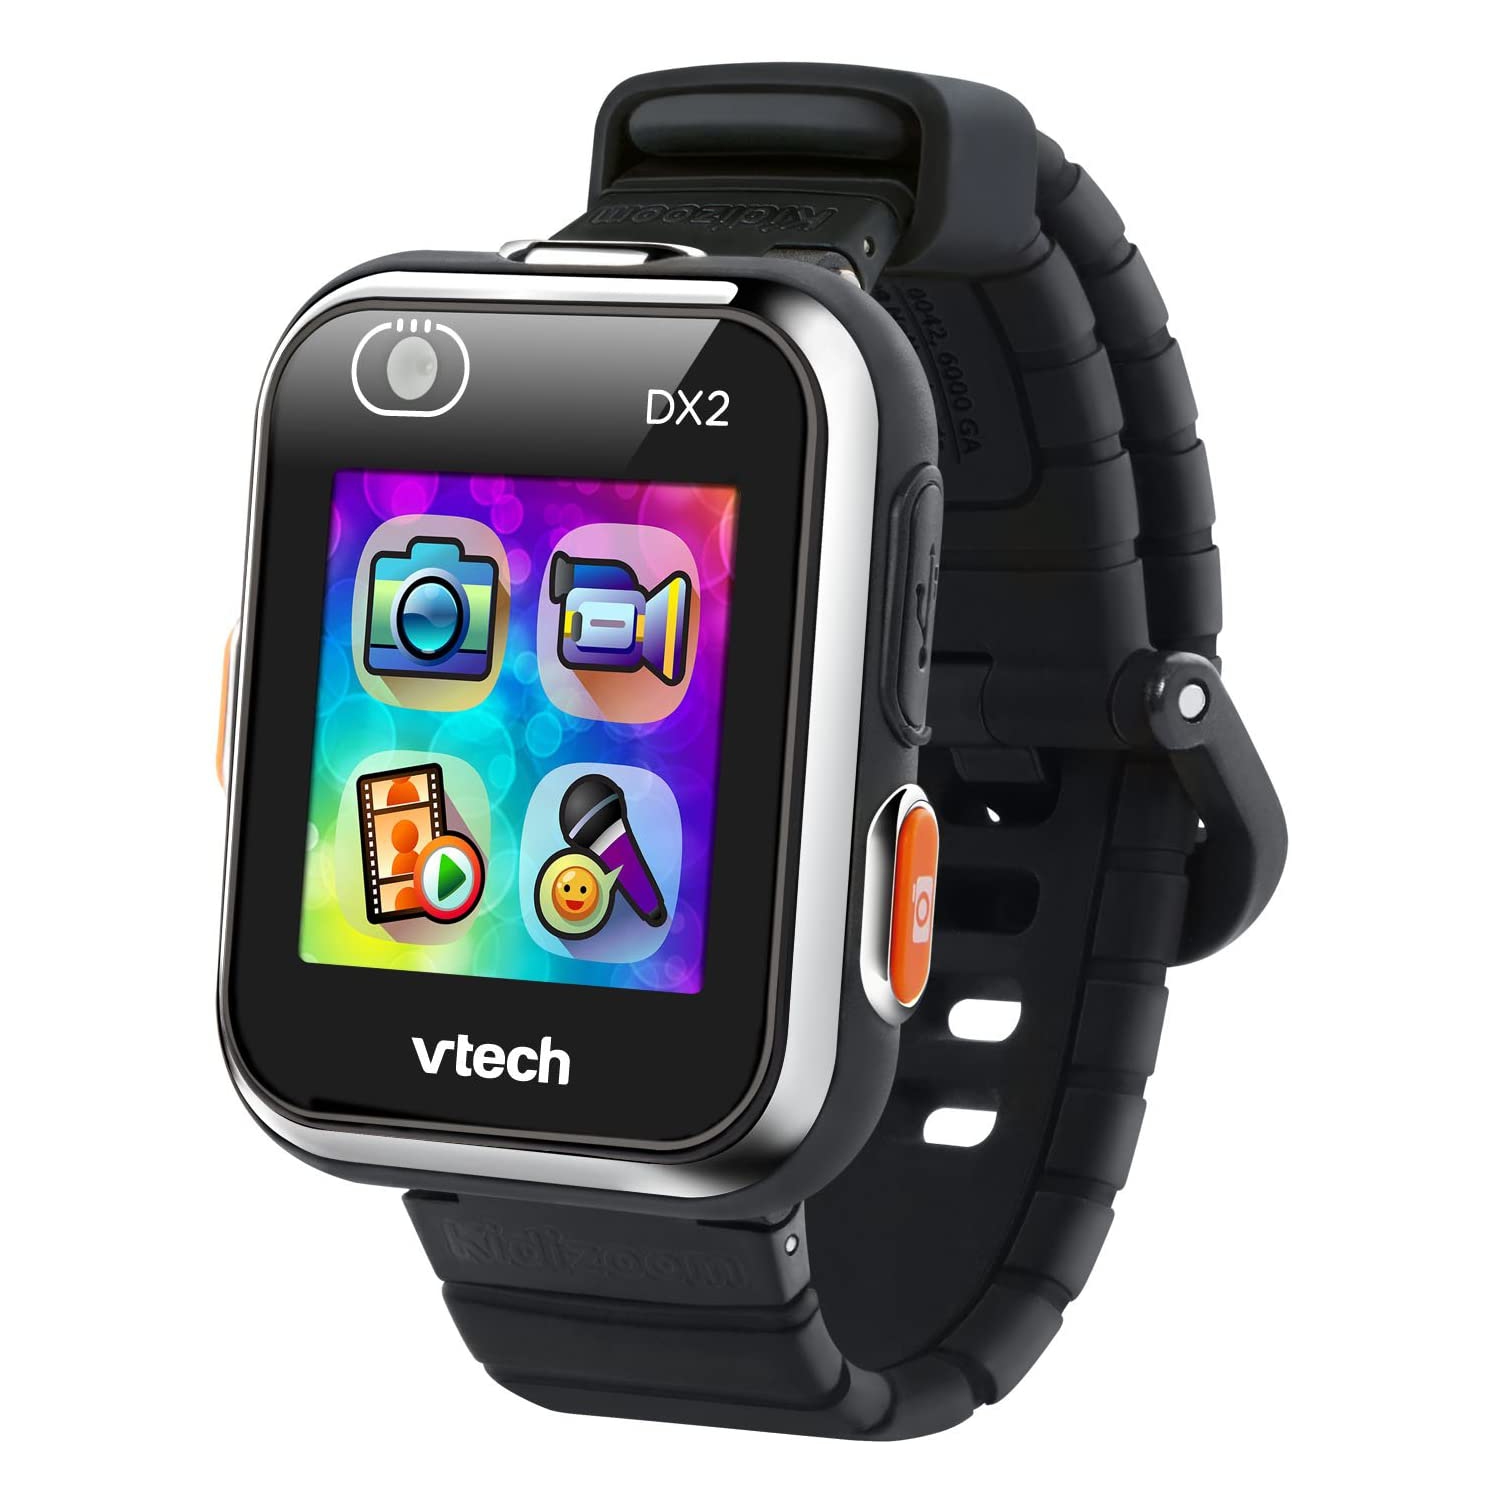 VTech Kidizoom Smartwatch DX2 basic Exclusive, Black